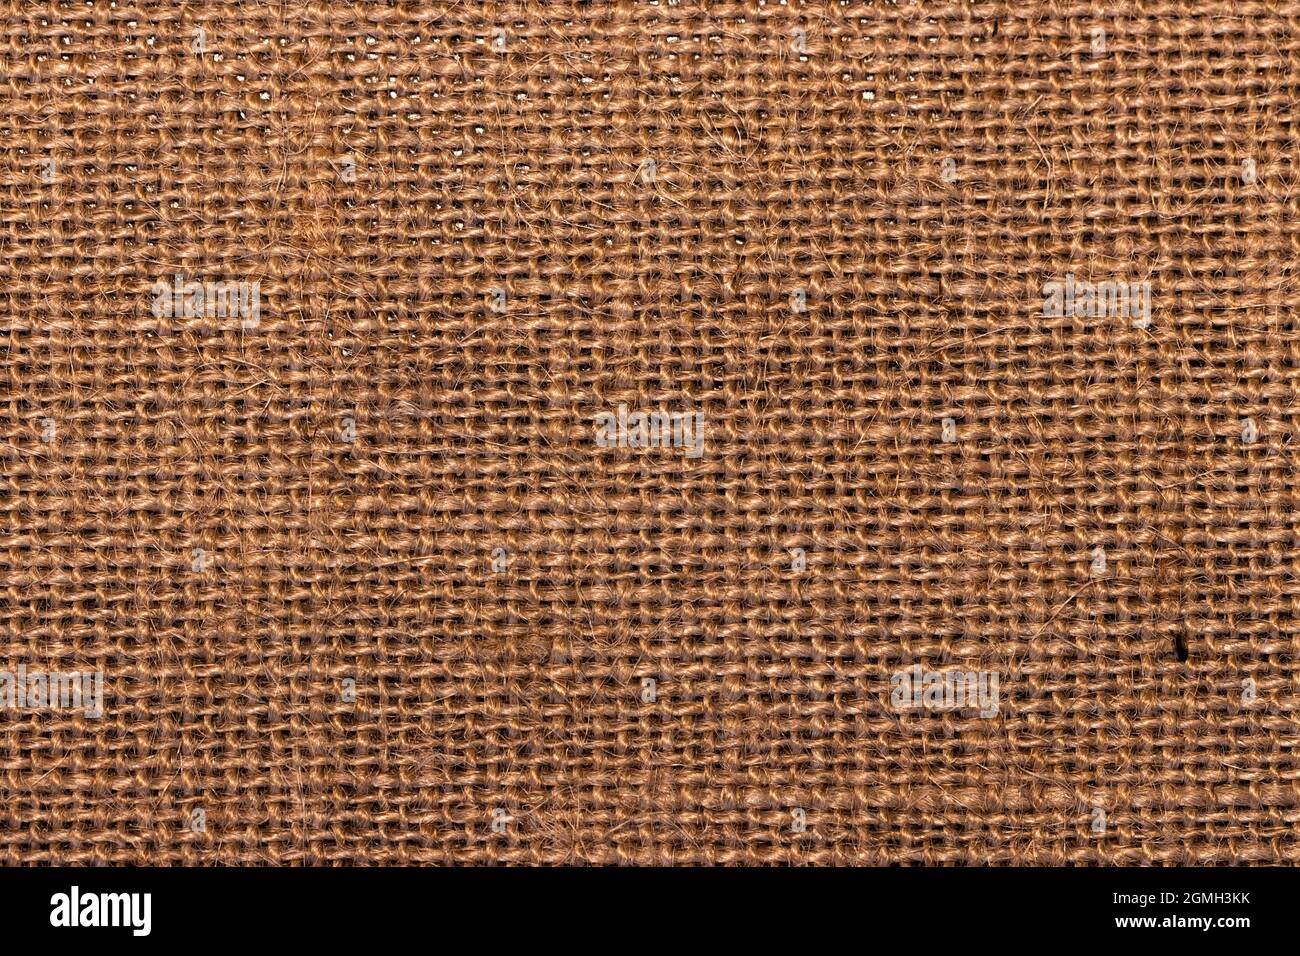 Primer plano saco con textura de fondo; marrón, rústico, tejido textura de tela Foto de stock